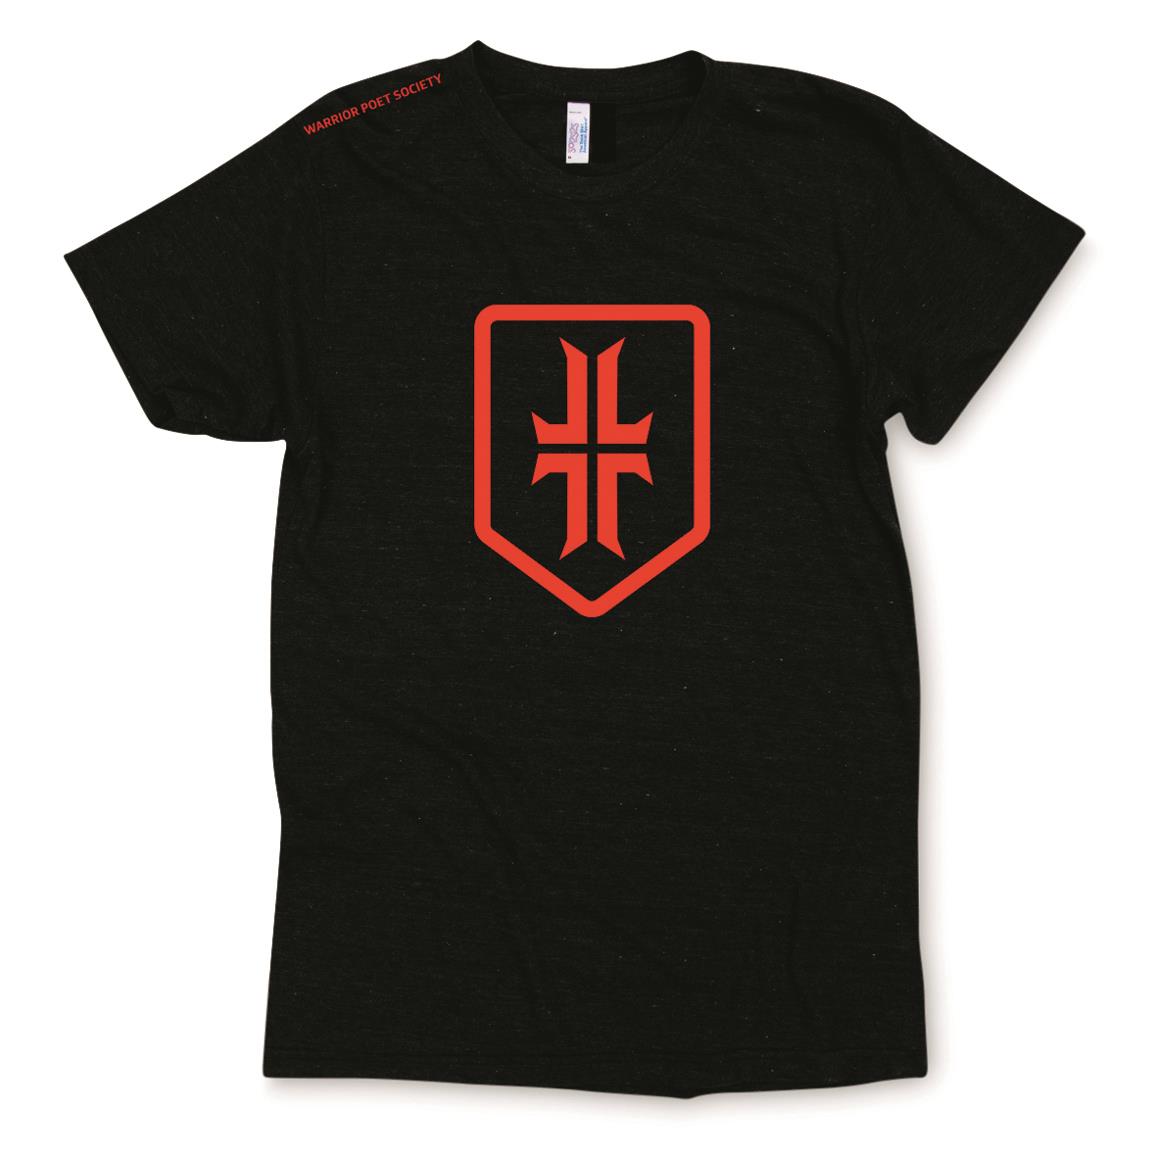 Warrior Poet Society Shield T-shirt, Black/Red